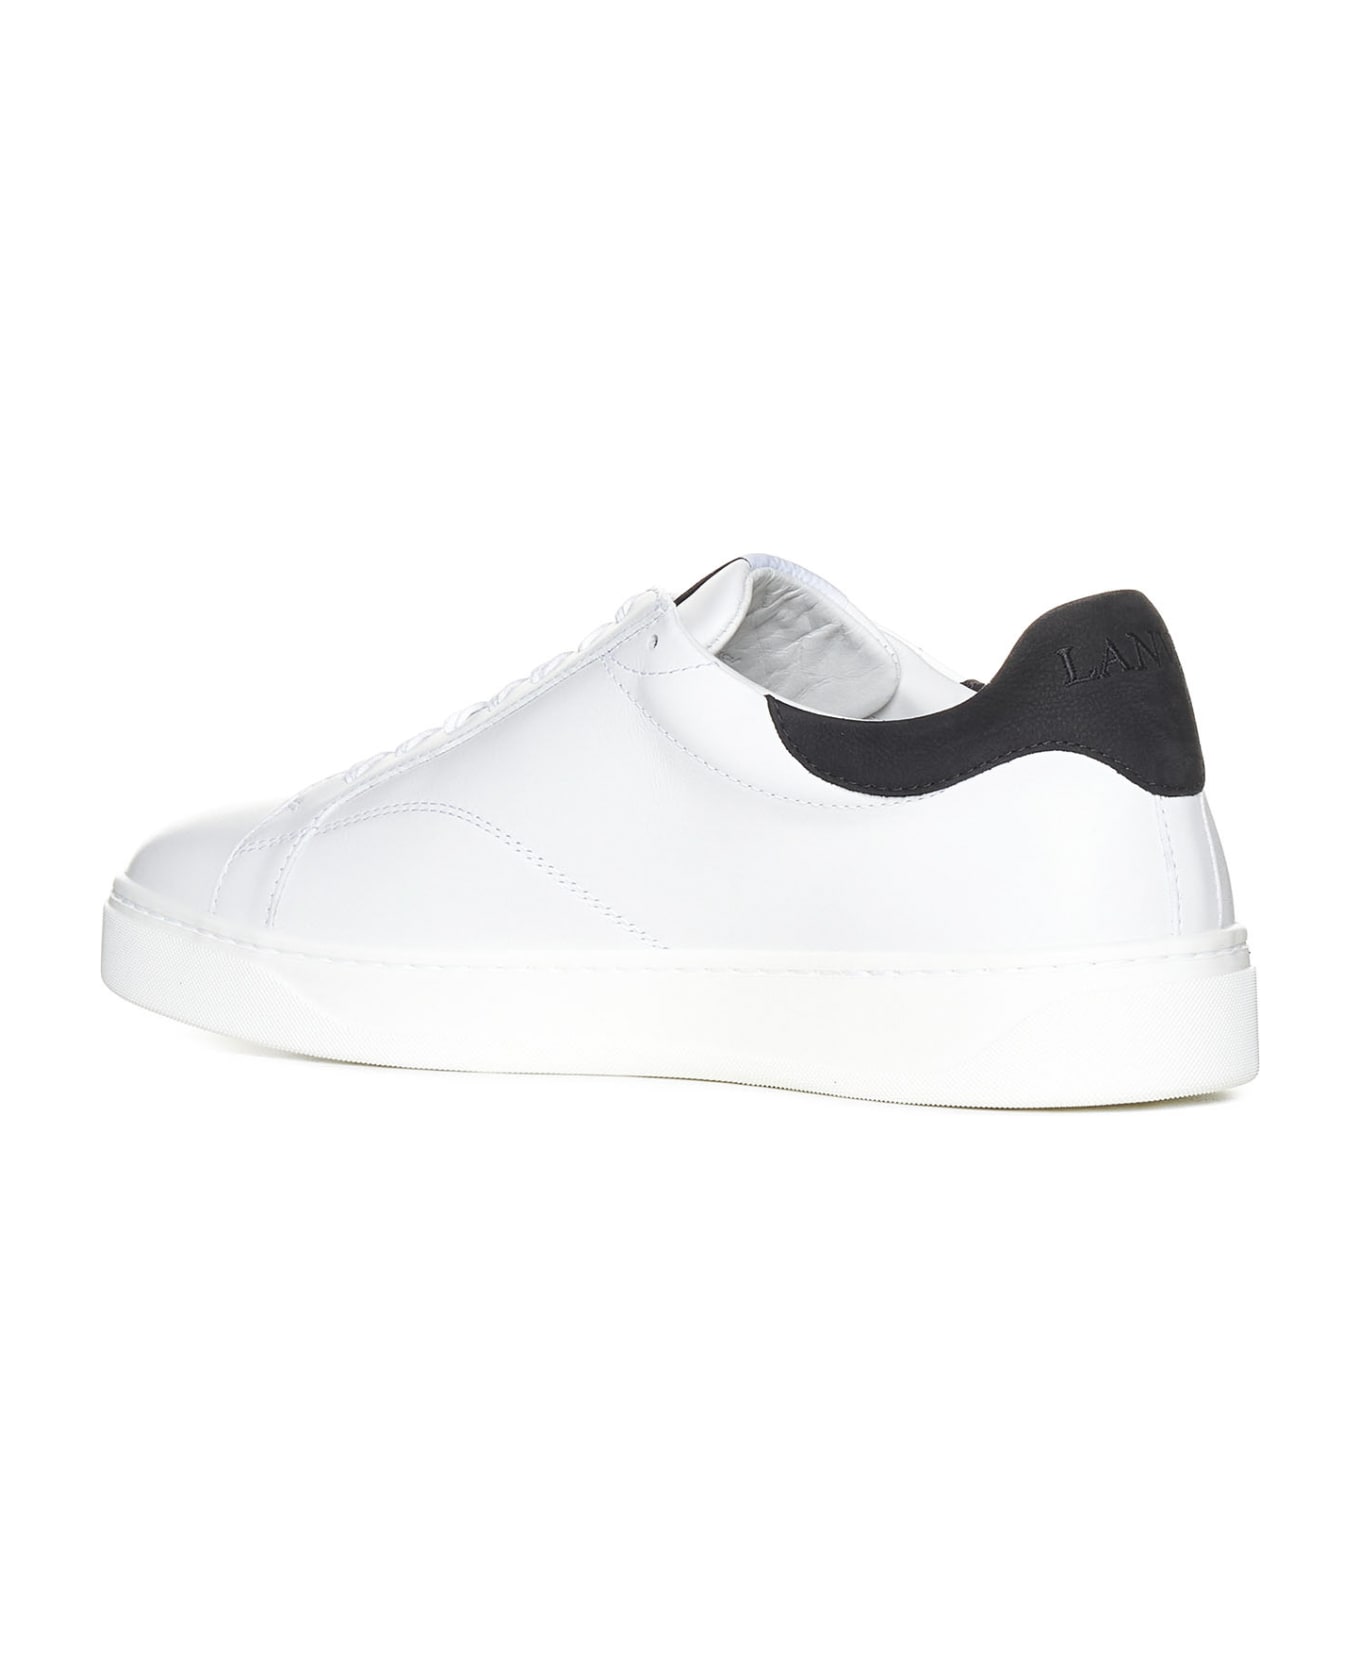 Lanvin Sneakers - White Black